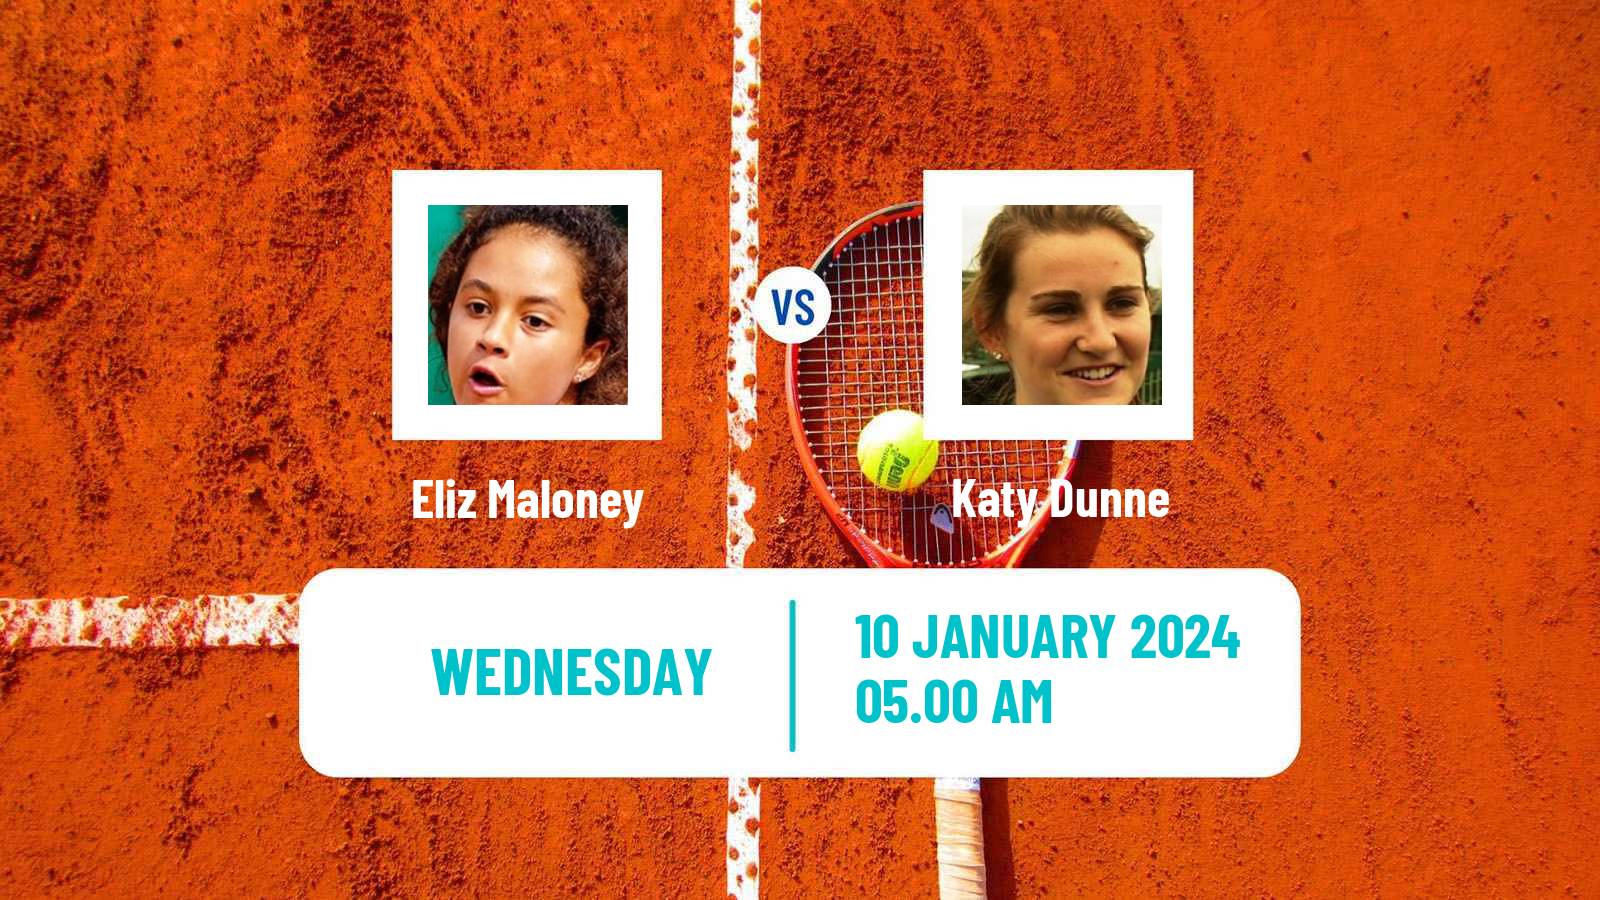 Tennis ITF W35 Loughborough Women Eliz Maloney - Katy Dunne